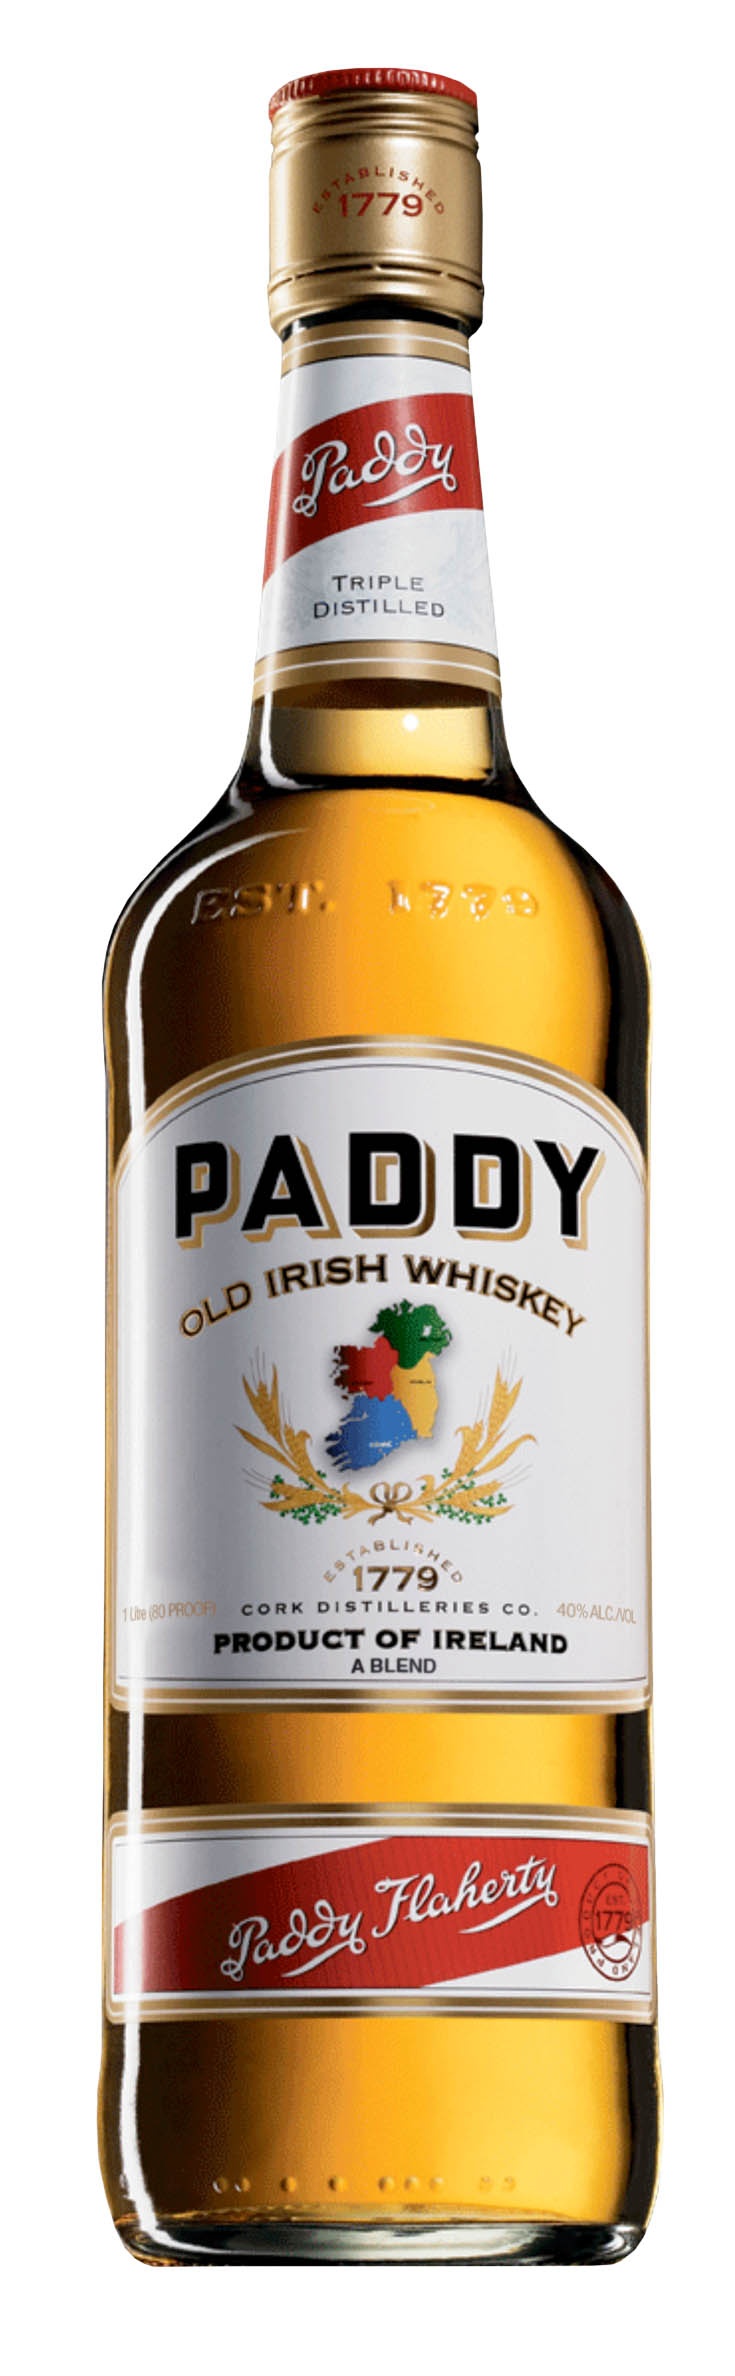 Paddy Old Irish Whiskey Bottle Shaped Sticker - Pro Sport Stickers